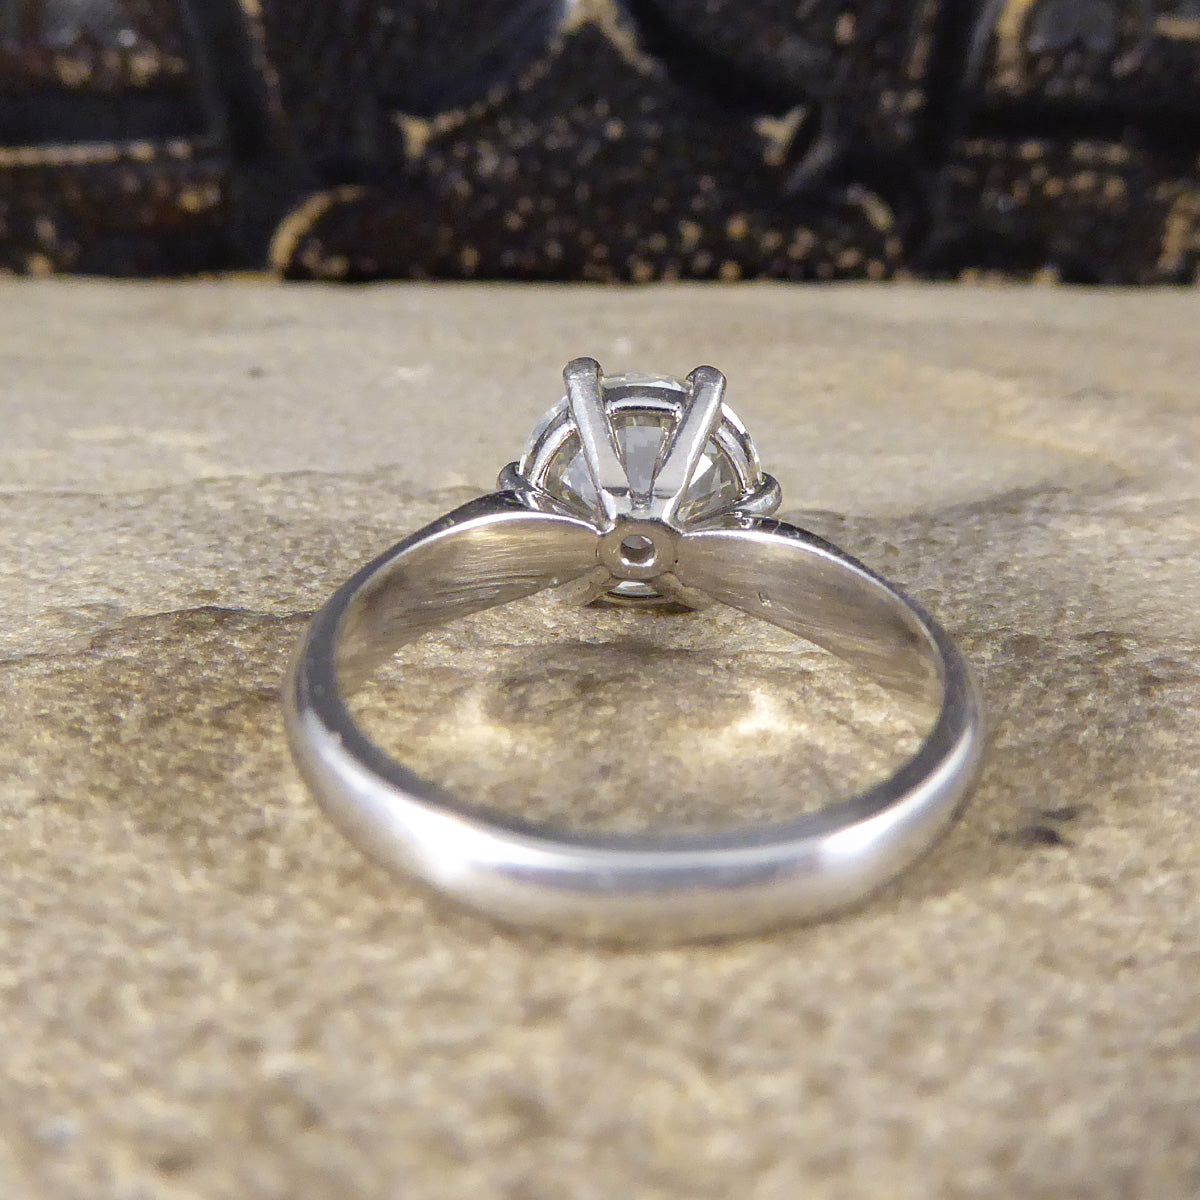 2.54ct Brilliant Cut Diamond Solitaire Engagement Ring on Plain Platinum Band